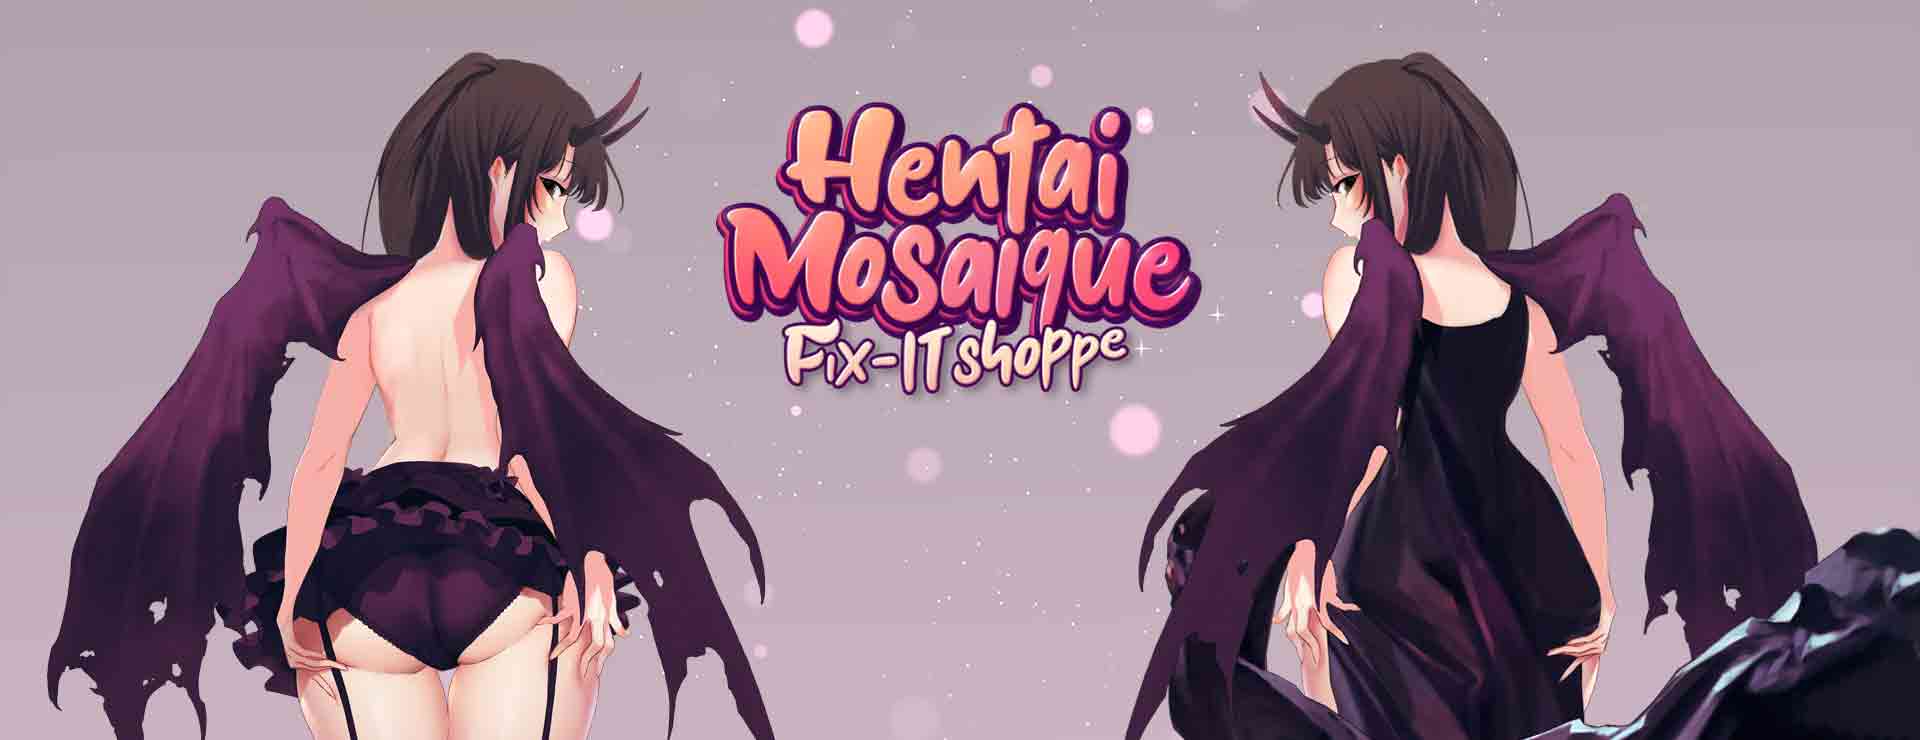 Hentai Mosaique Fix-IT Shoppe - カジュアル ゲーム